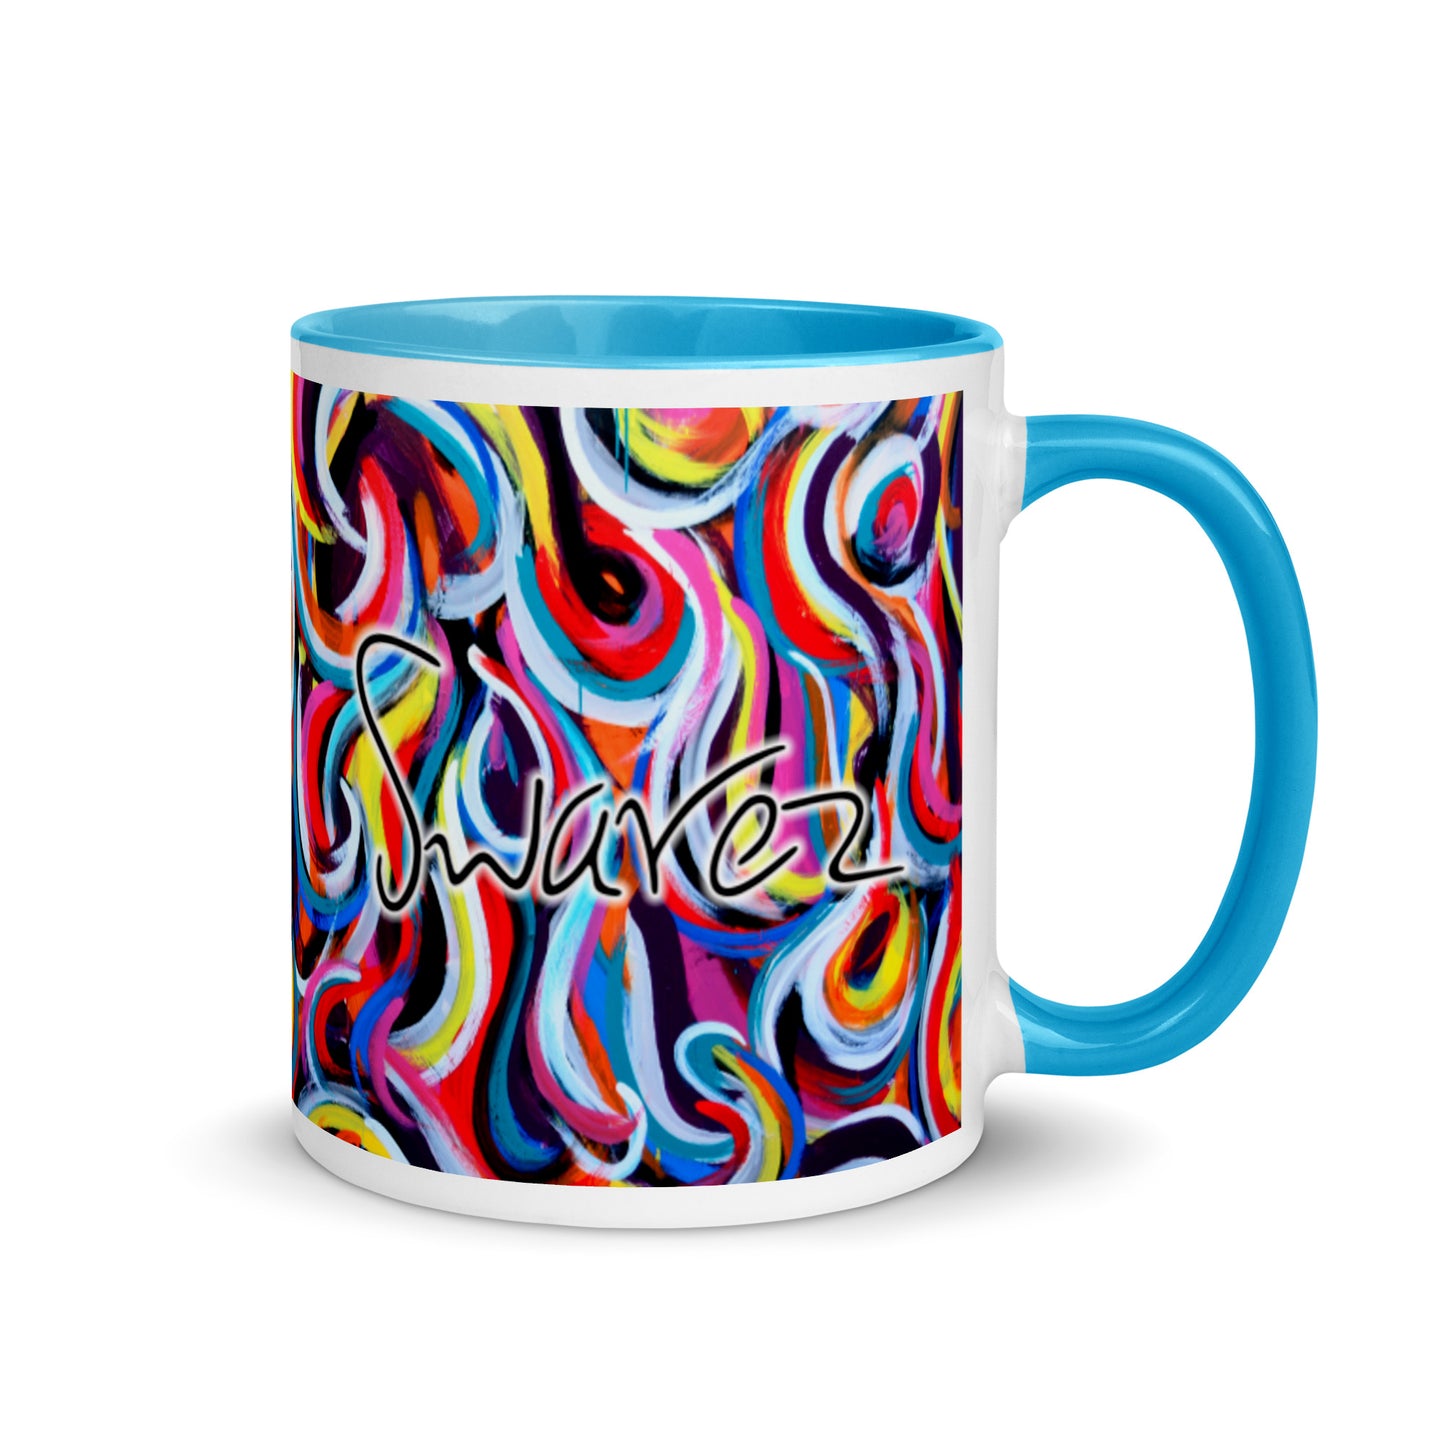 Mug with Color Inside - Multi color swirl design